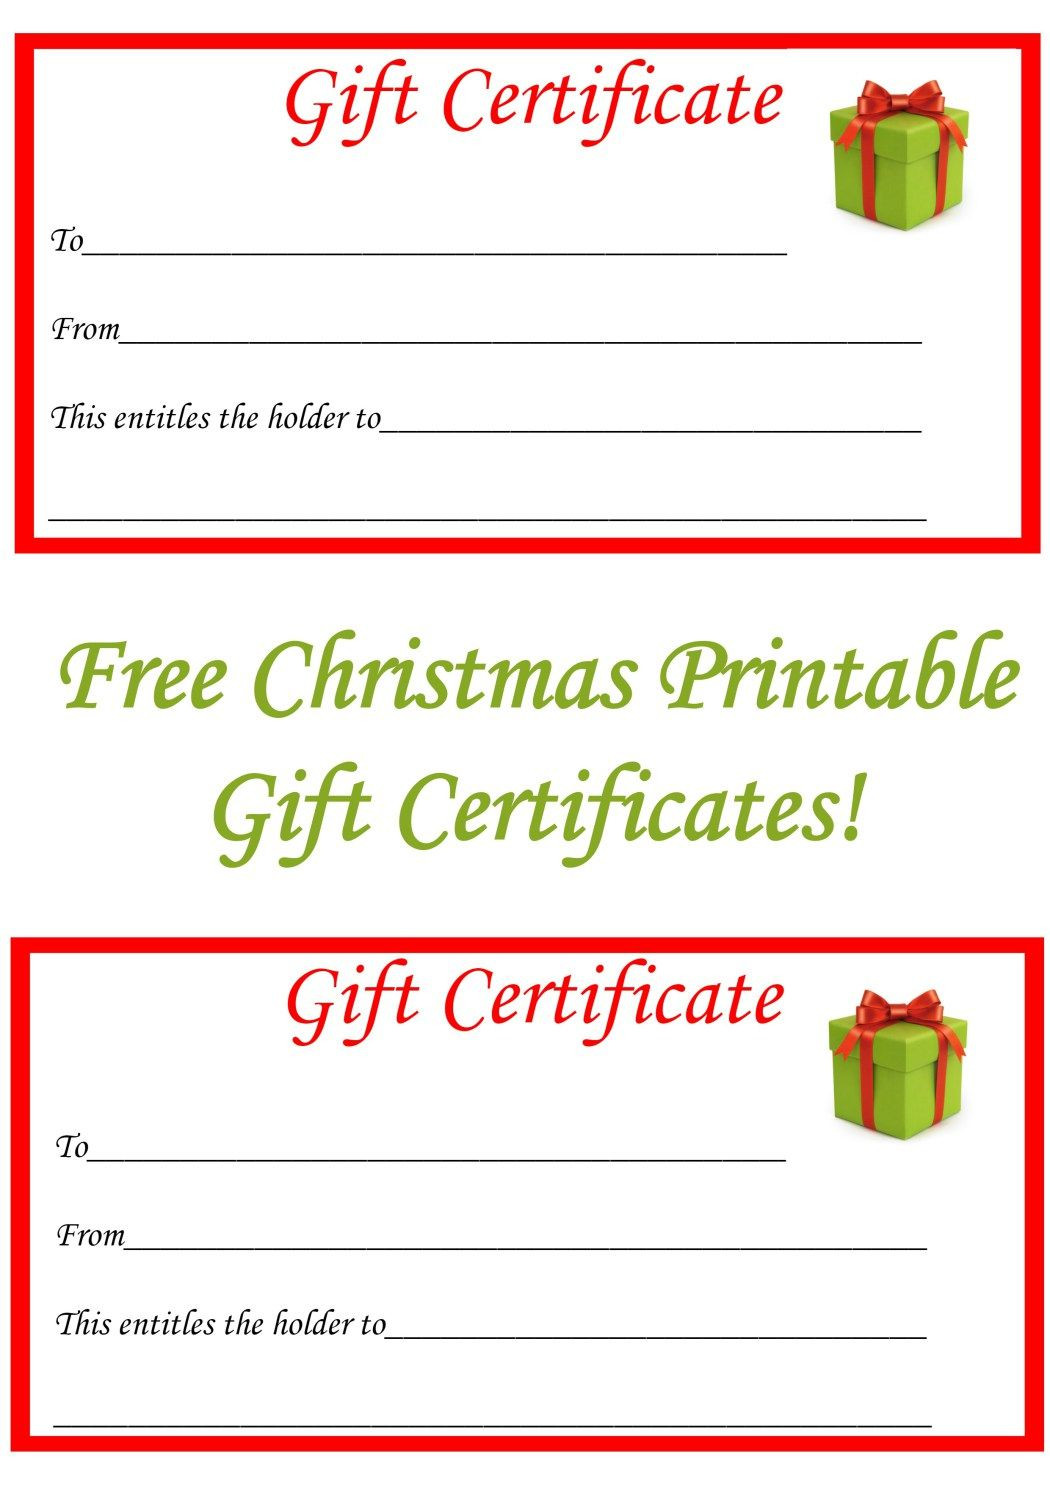 Christmas Gift Certificate Ideas
 Best 25 Printable t certificates ideas on Pinterest